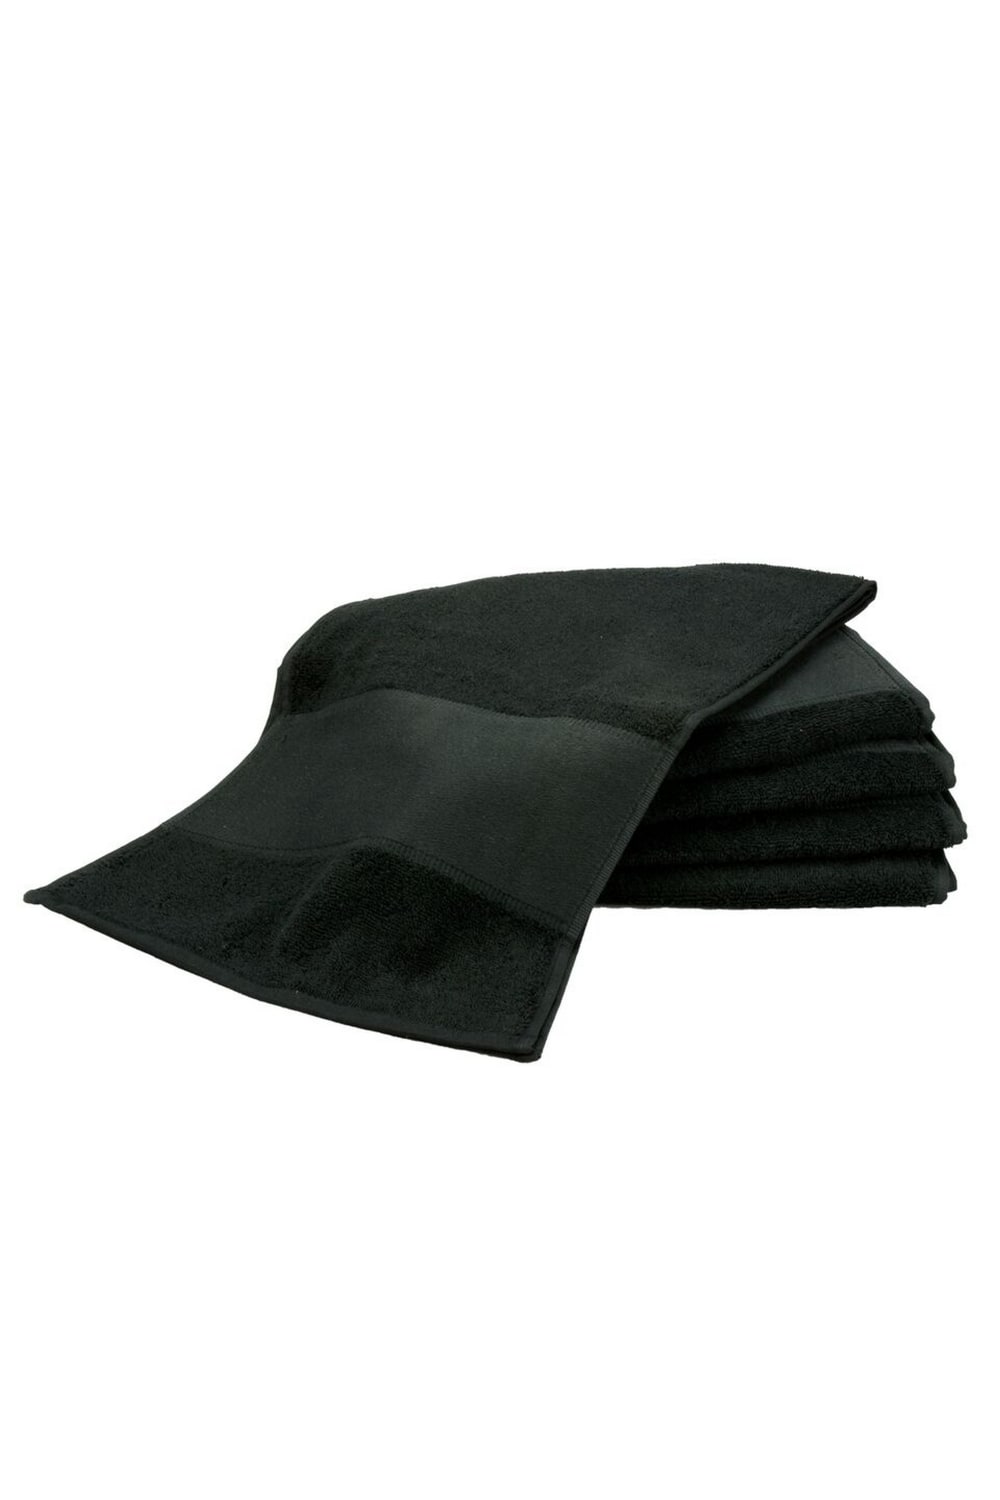 A&R Towels Print-Me Sport Towel (Black) (One Size)